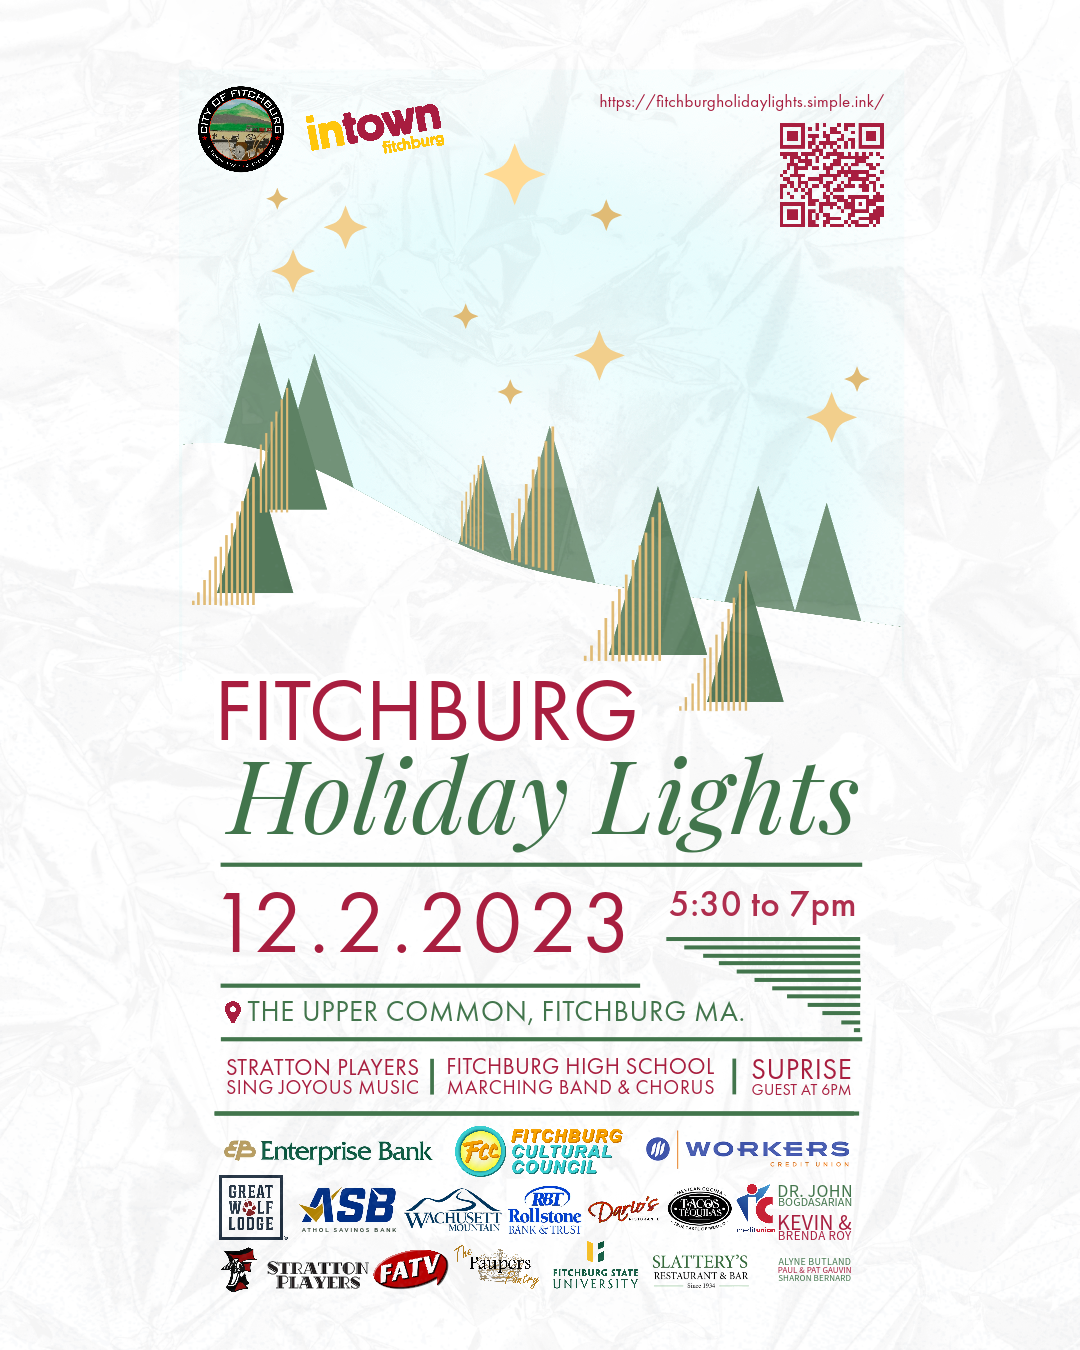 Fitchburg Holiday Lights Instagram-1 (1).png